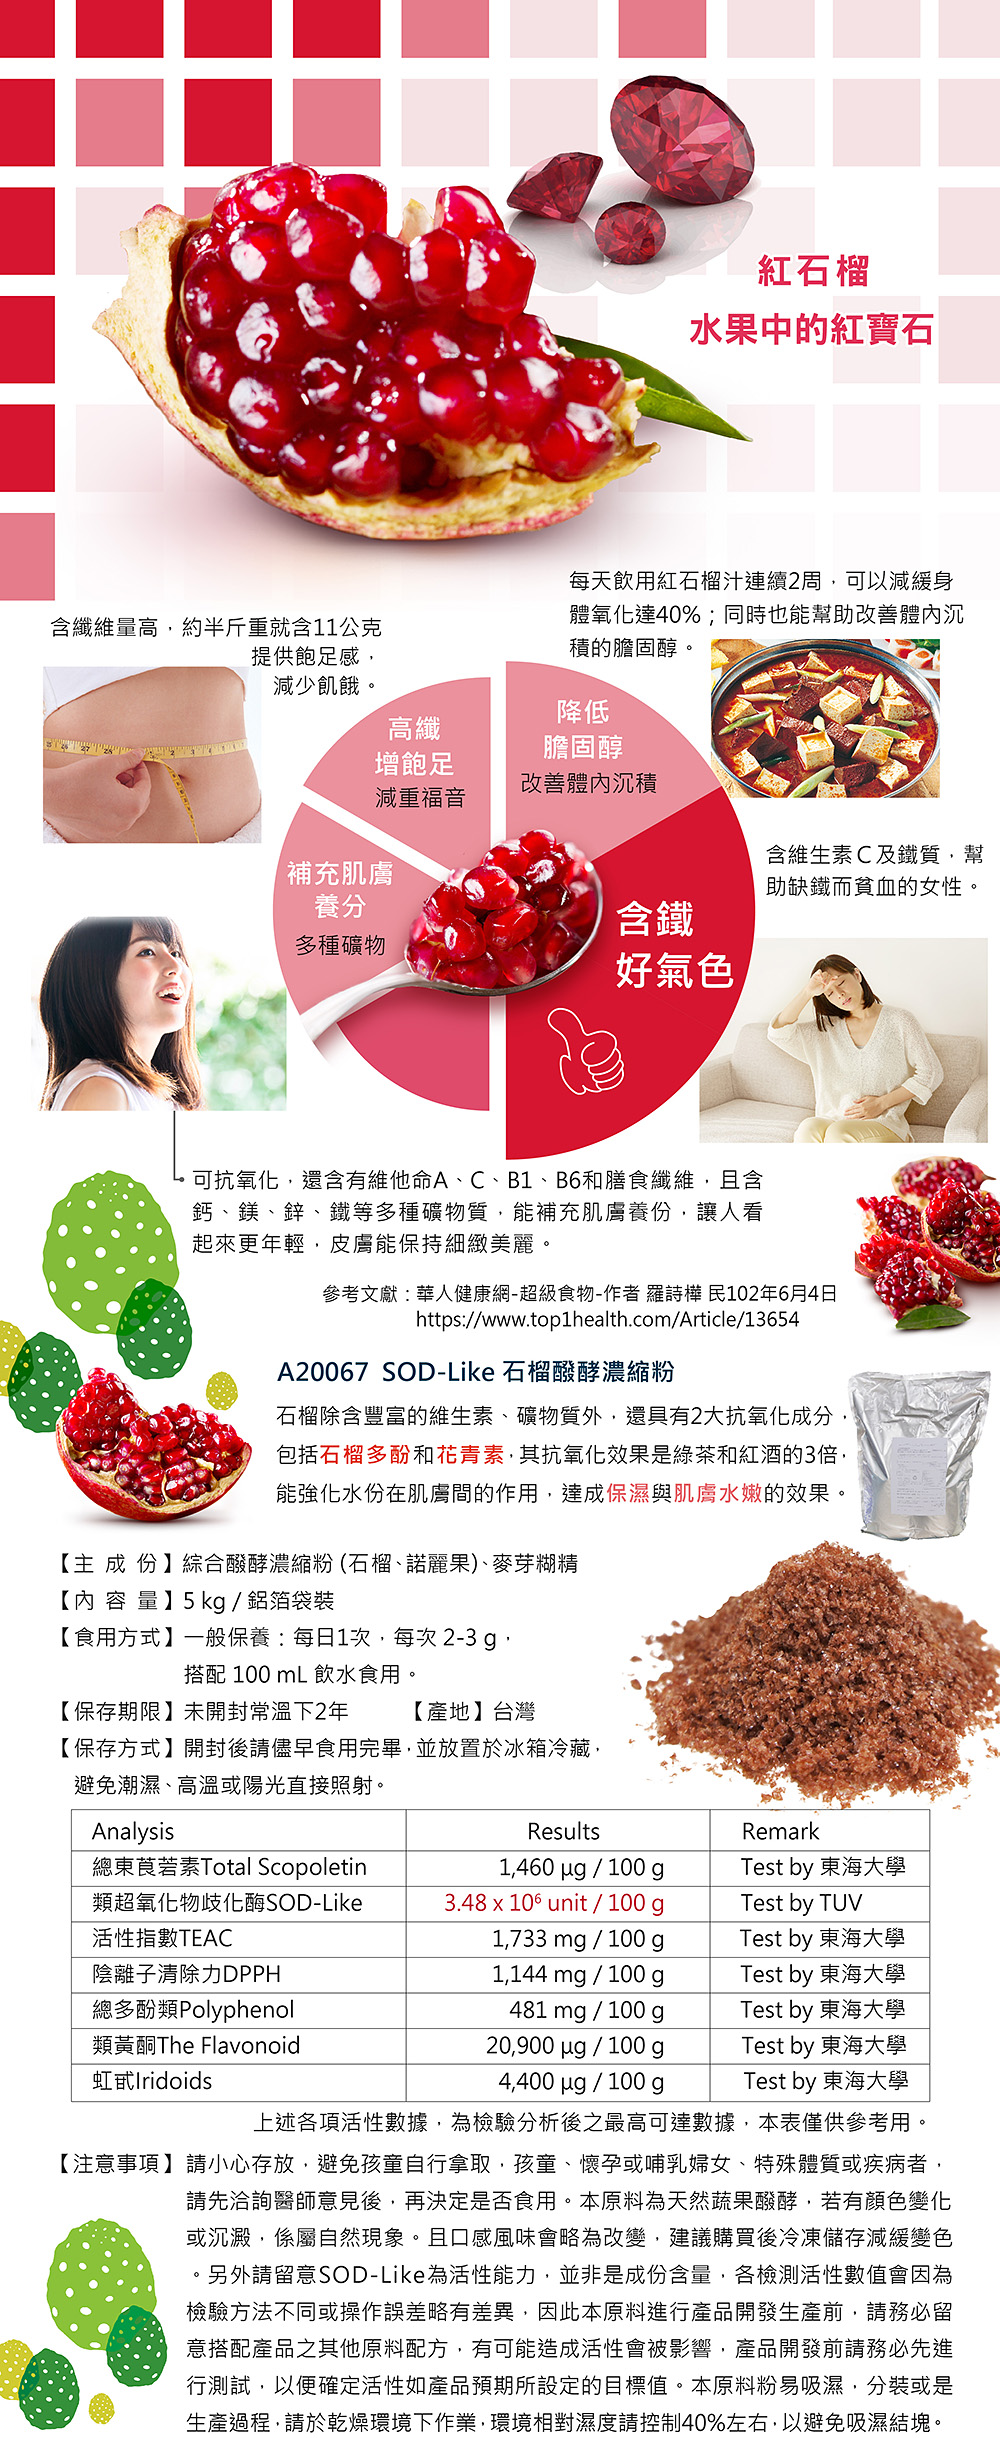 4.石榴粉_pomegranate powder.jpg